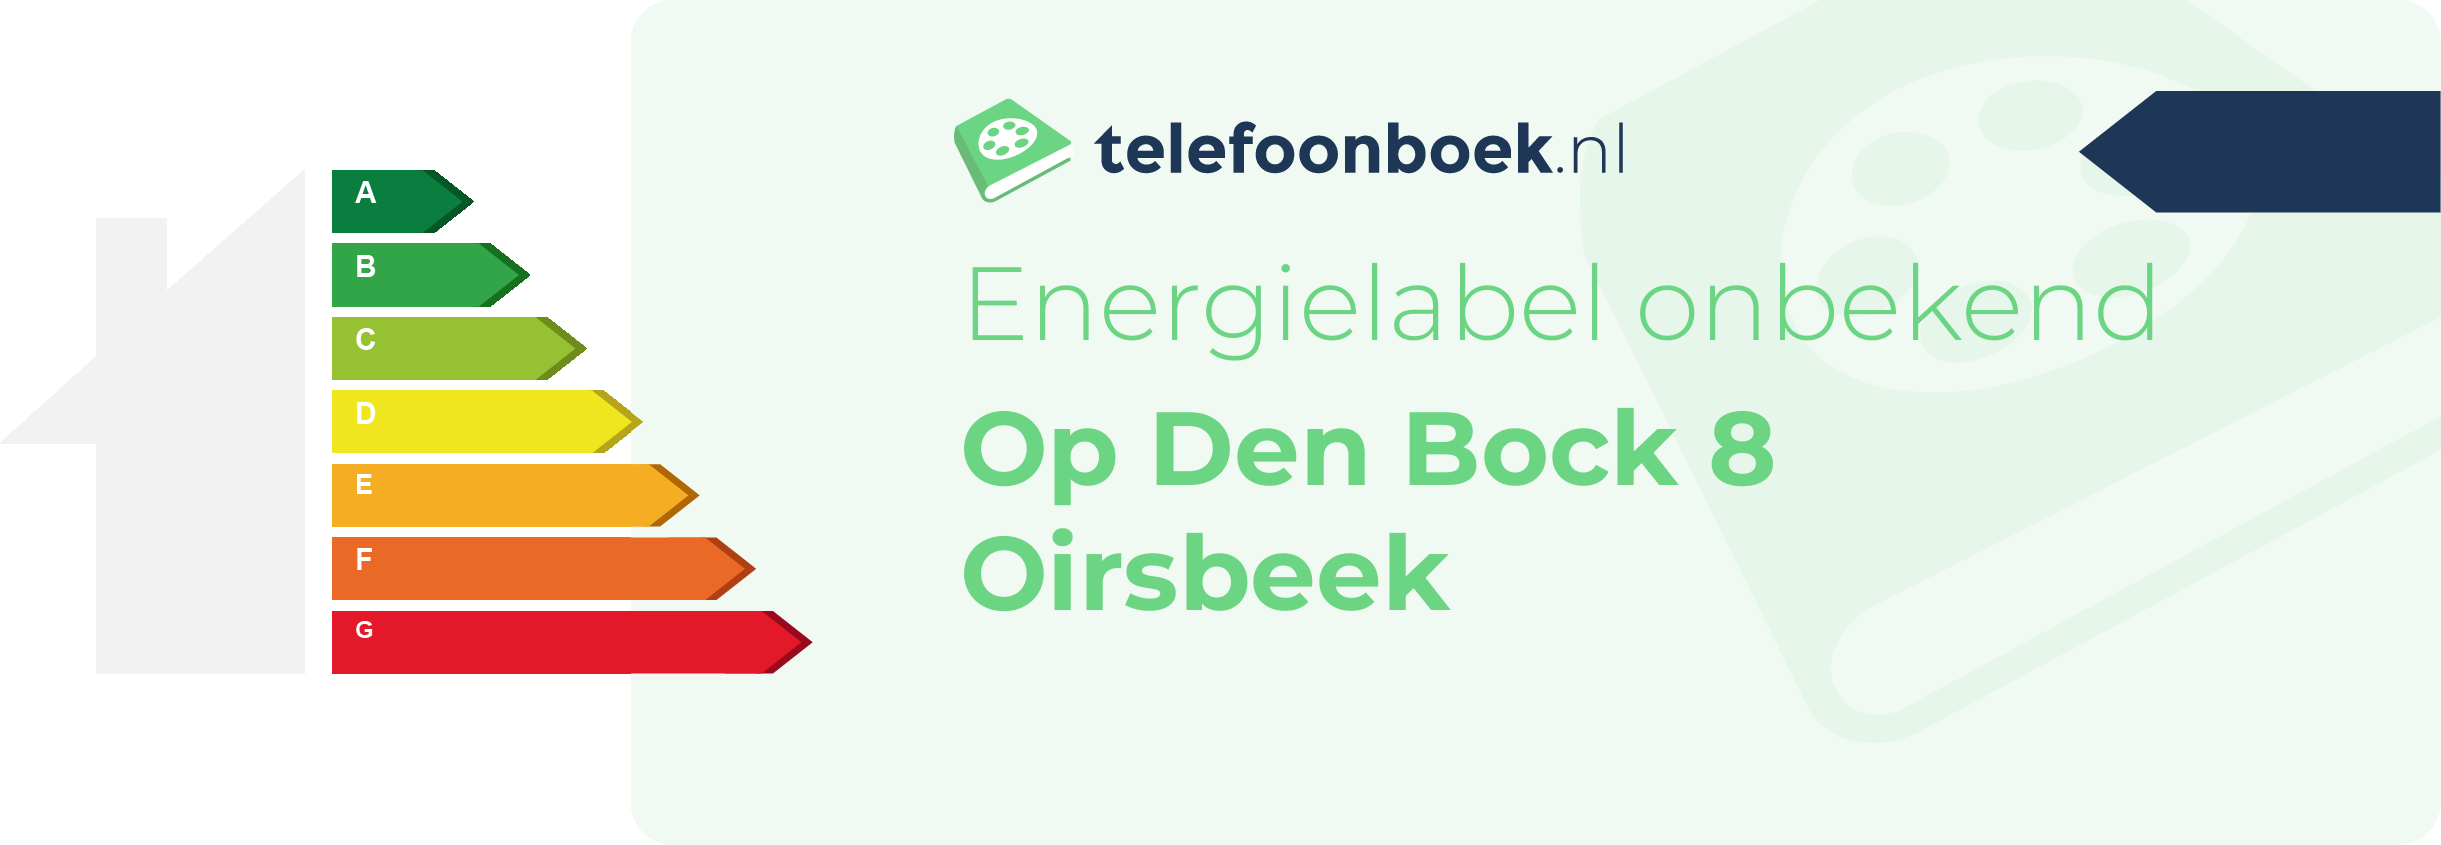 Energielabel Op Den Bock 8 Oirsbeek